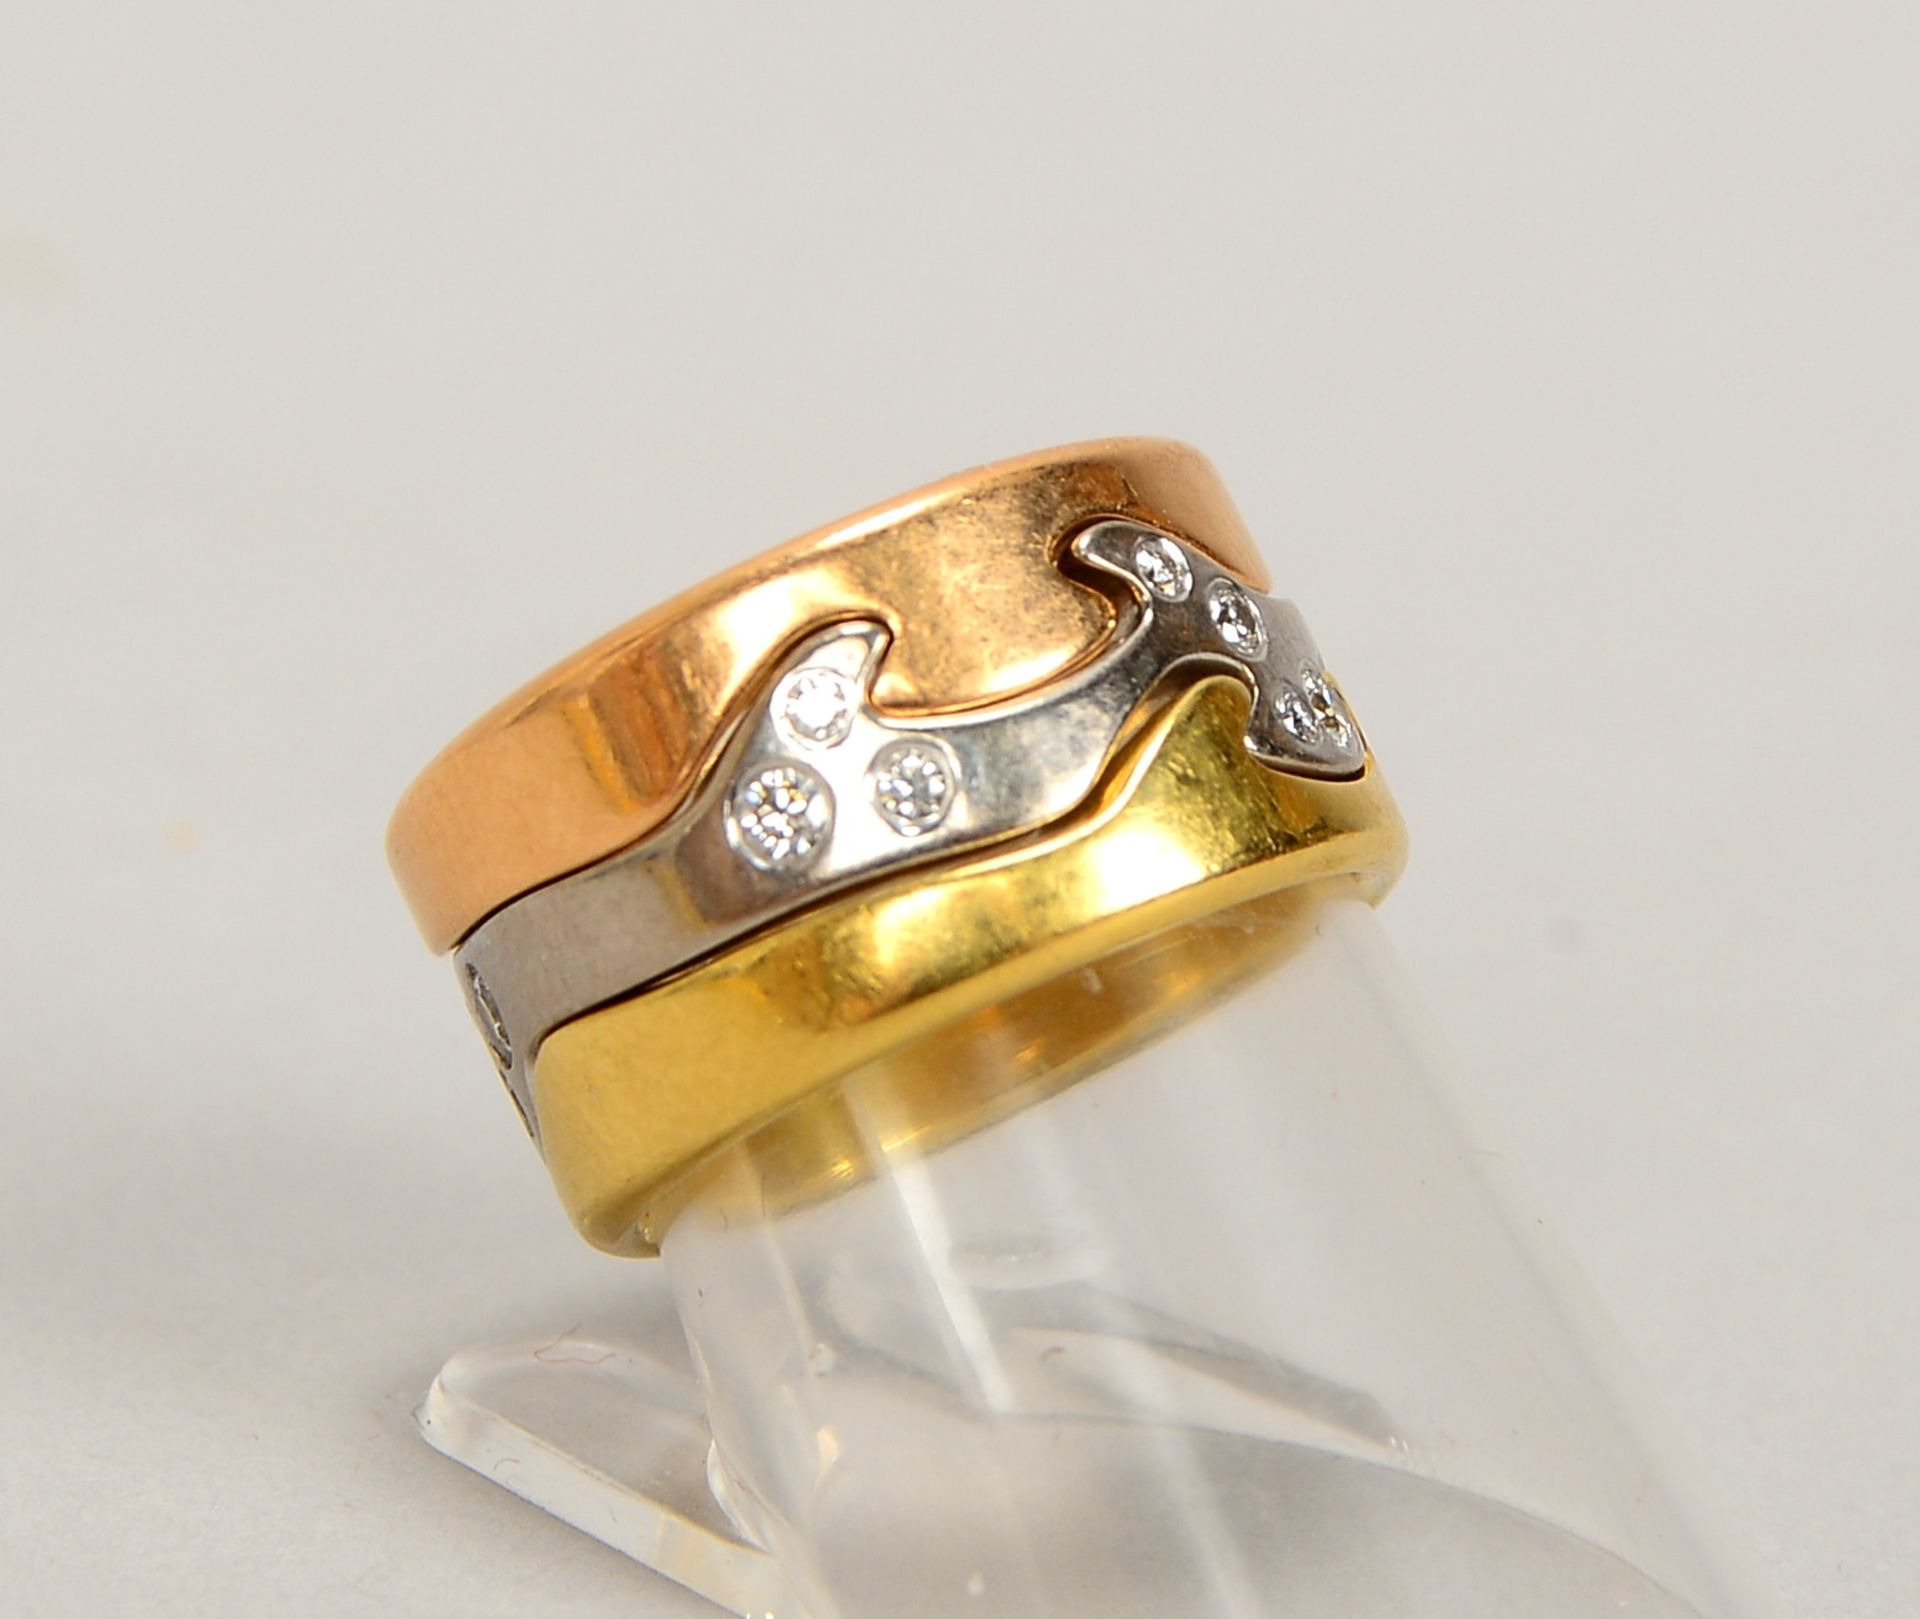 Georg Jensen, 'Fusion-Ring', 750 Gold/tricolor (gest.), 3x Ringe/mit kl. Brill.; Gew. 14,60 g